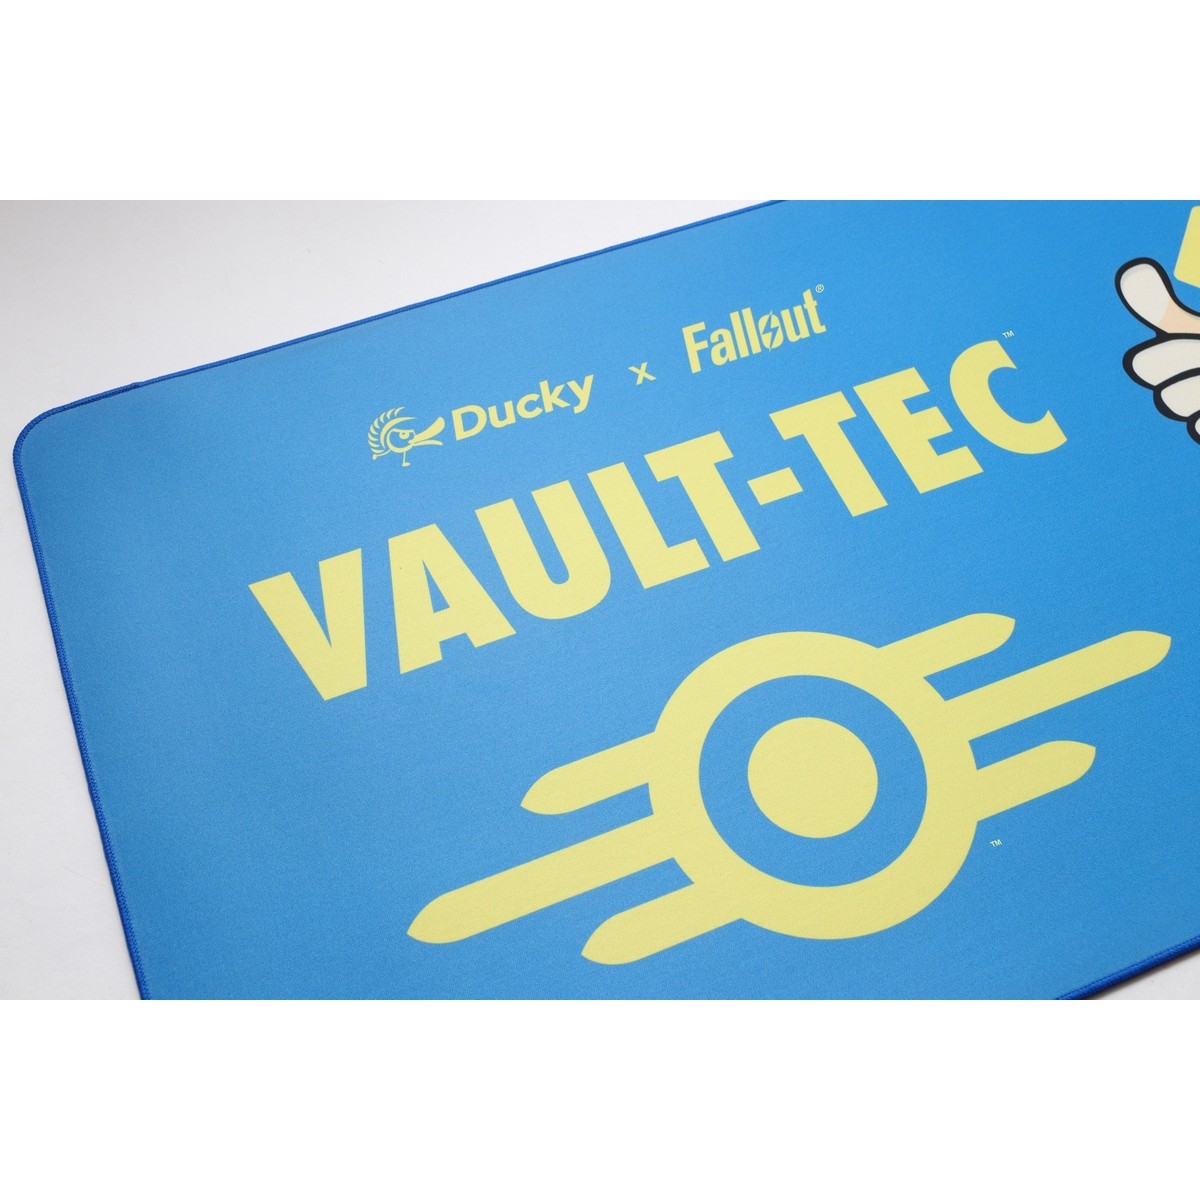 Ducky - Ducky x Fallout 3XL Gaming Surface - Vault Tec (800x350x30mm)